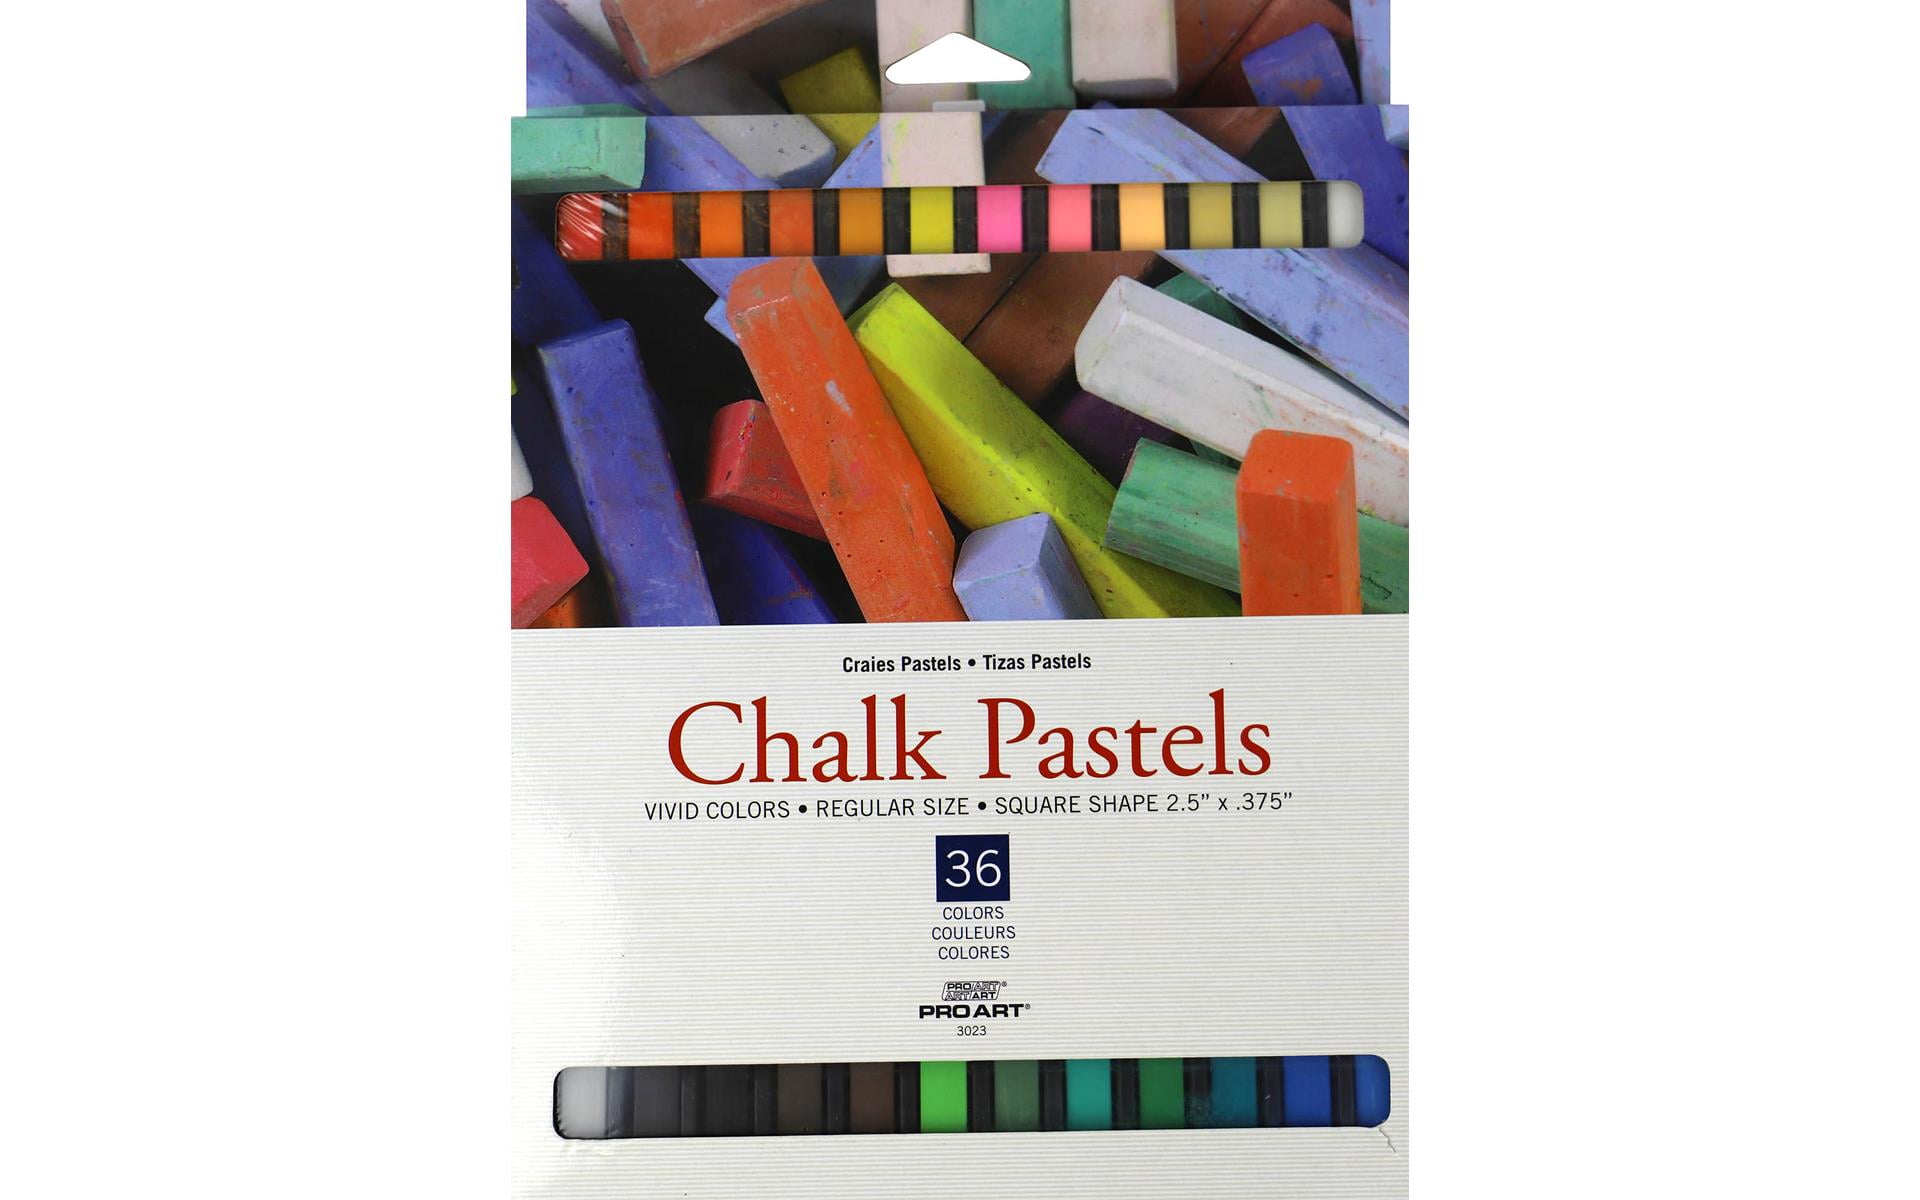 Pro Art Chalk Pastel 12 Color Set: California State University, Chico State